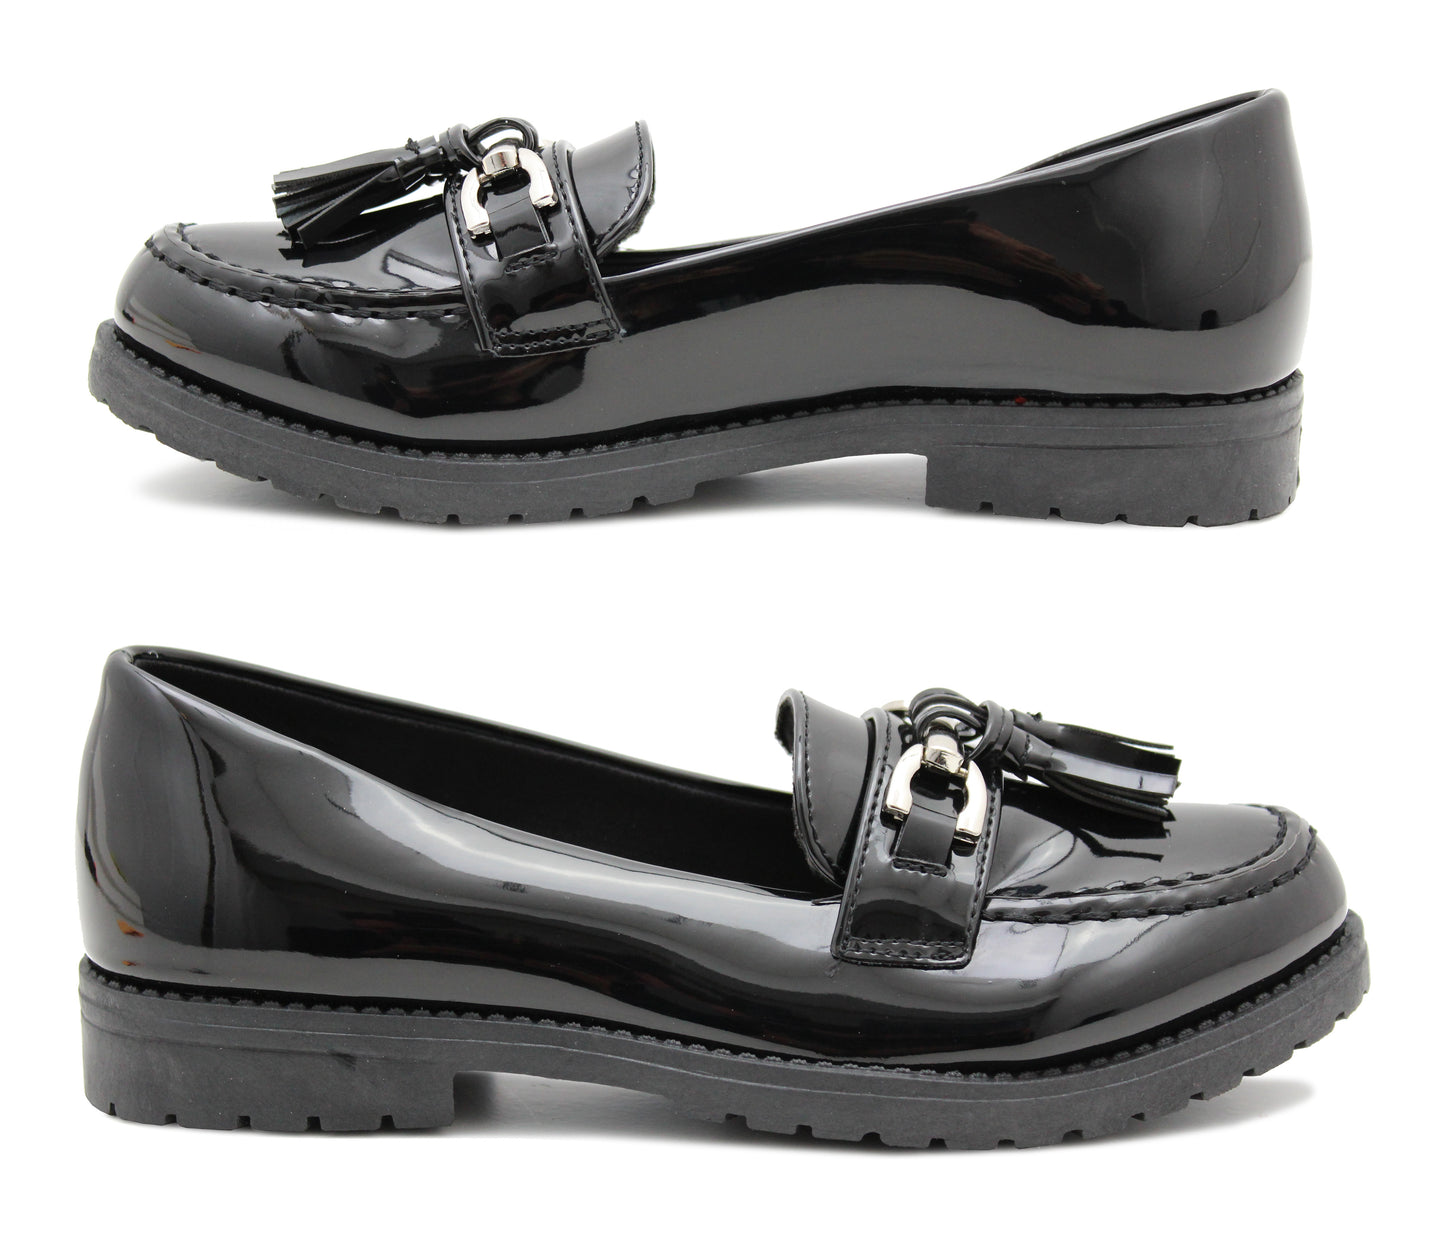 AVA Girls Slip On School Shoes Kids Black Patent Smart Formal Uniform Buckle Tassel Loafers Pumps